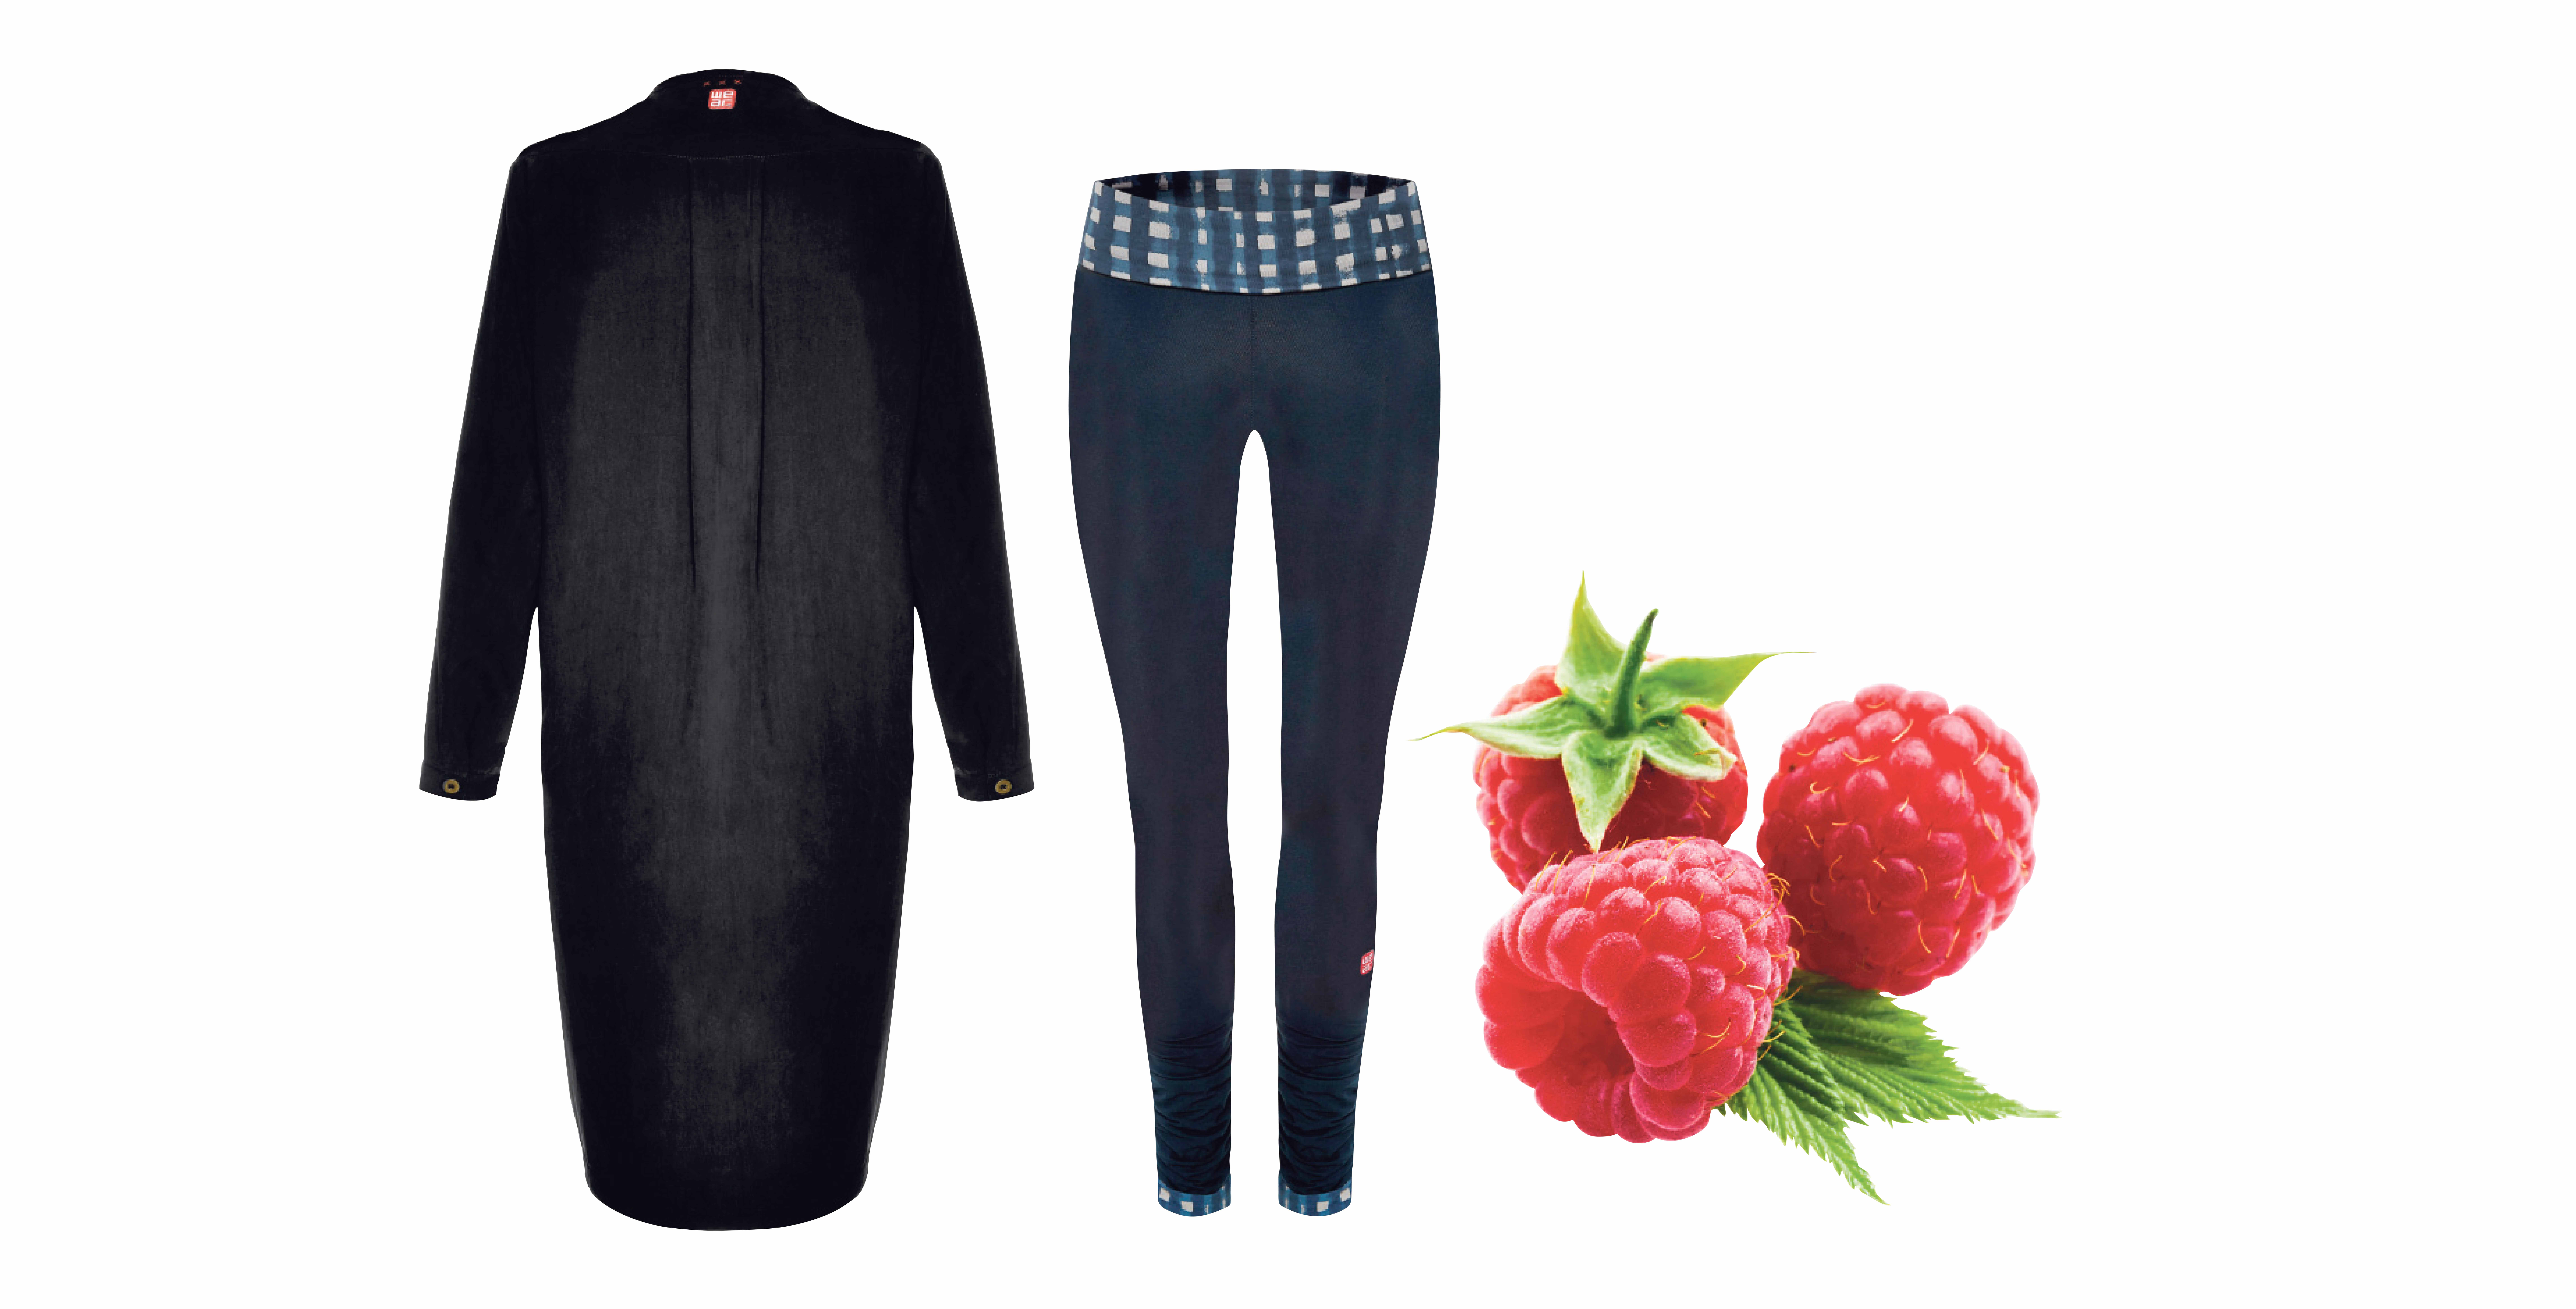 We'ar silk 'Painters' Smock; We'ar 'New Romantic' leggings; Raspberry Leaf Tonic.